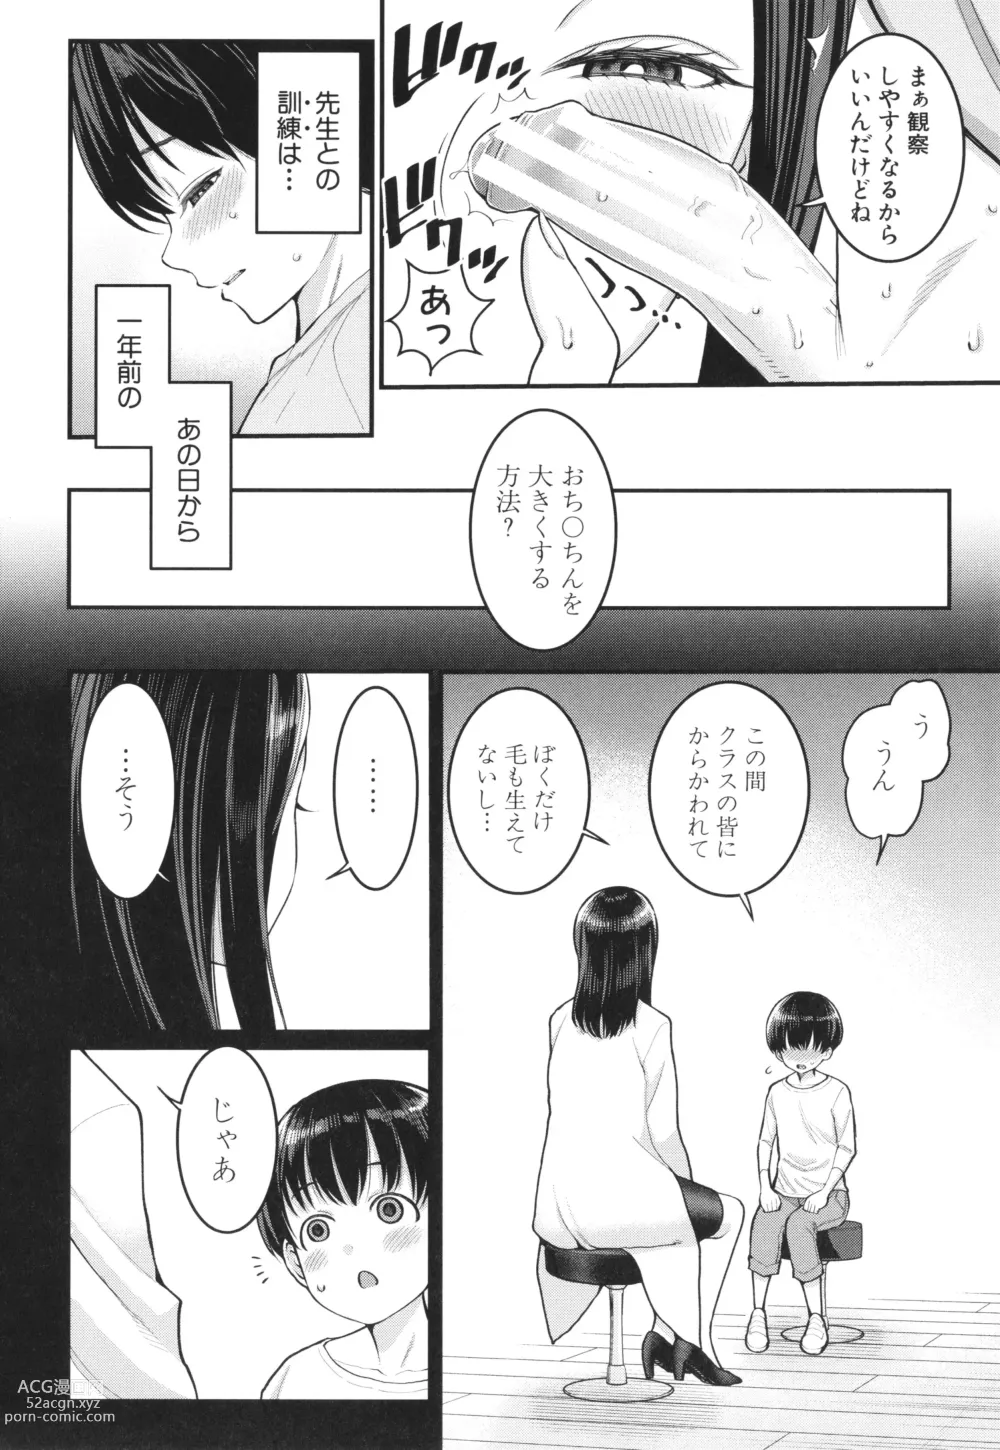 Page 6 of manga Shiori Sensei wa Ochinchin no Sodateya-san - This is a story of sexual love with a school nurse ar the growth of a   boys penis.